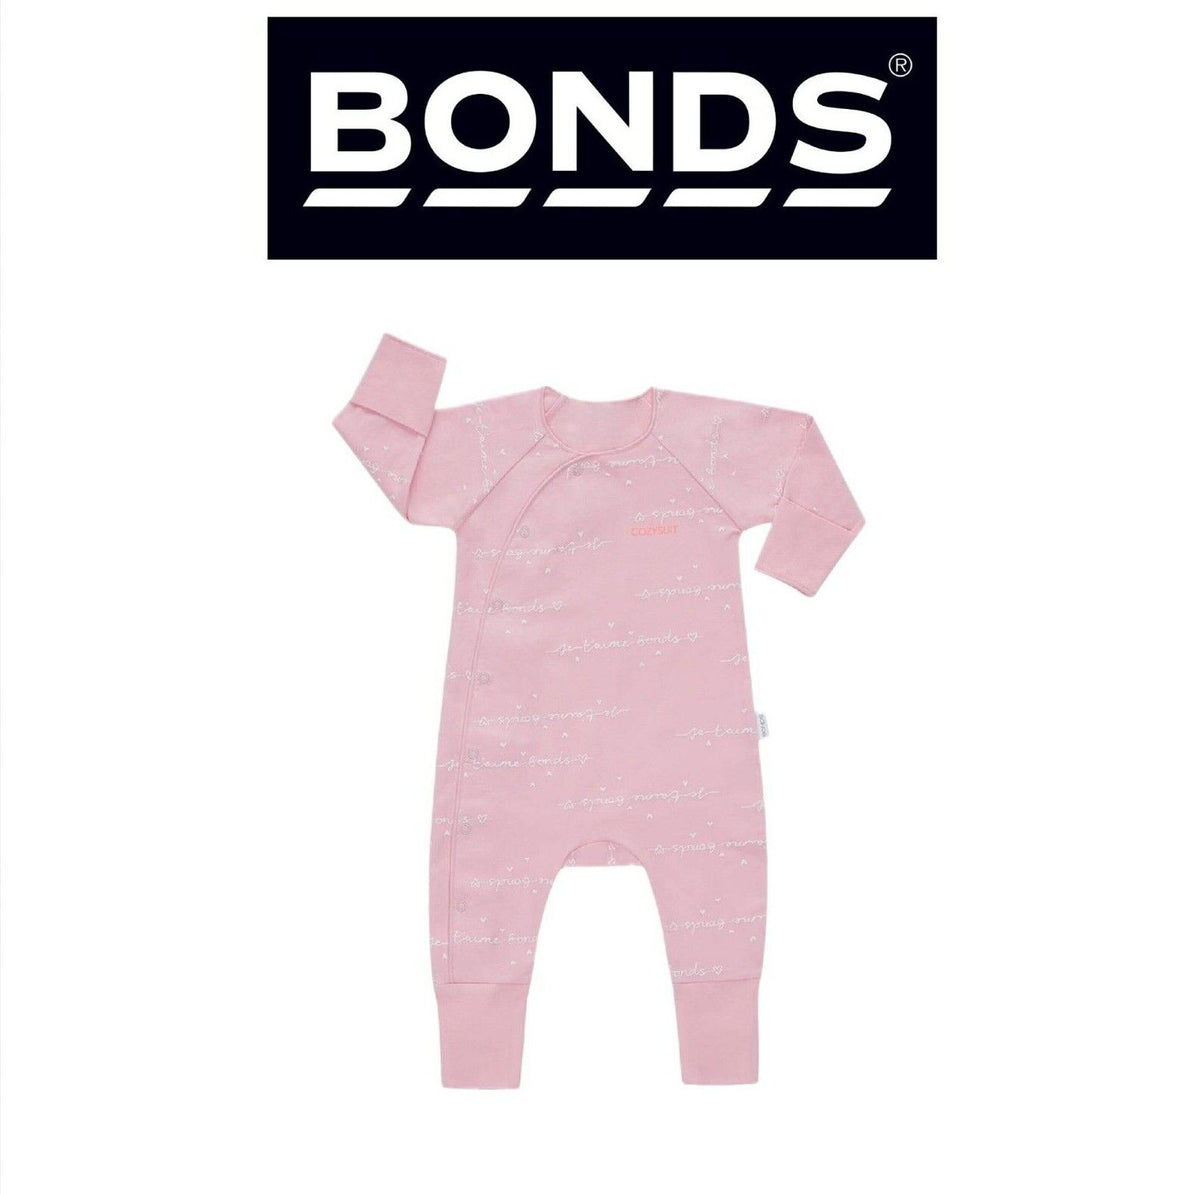 Bonds Baby Newbies Coverall Super Soft Cozysuit & Stretchable Fabic BXQBA